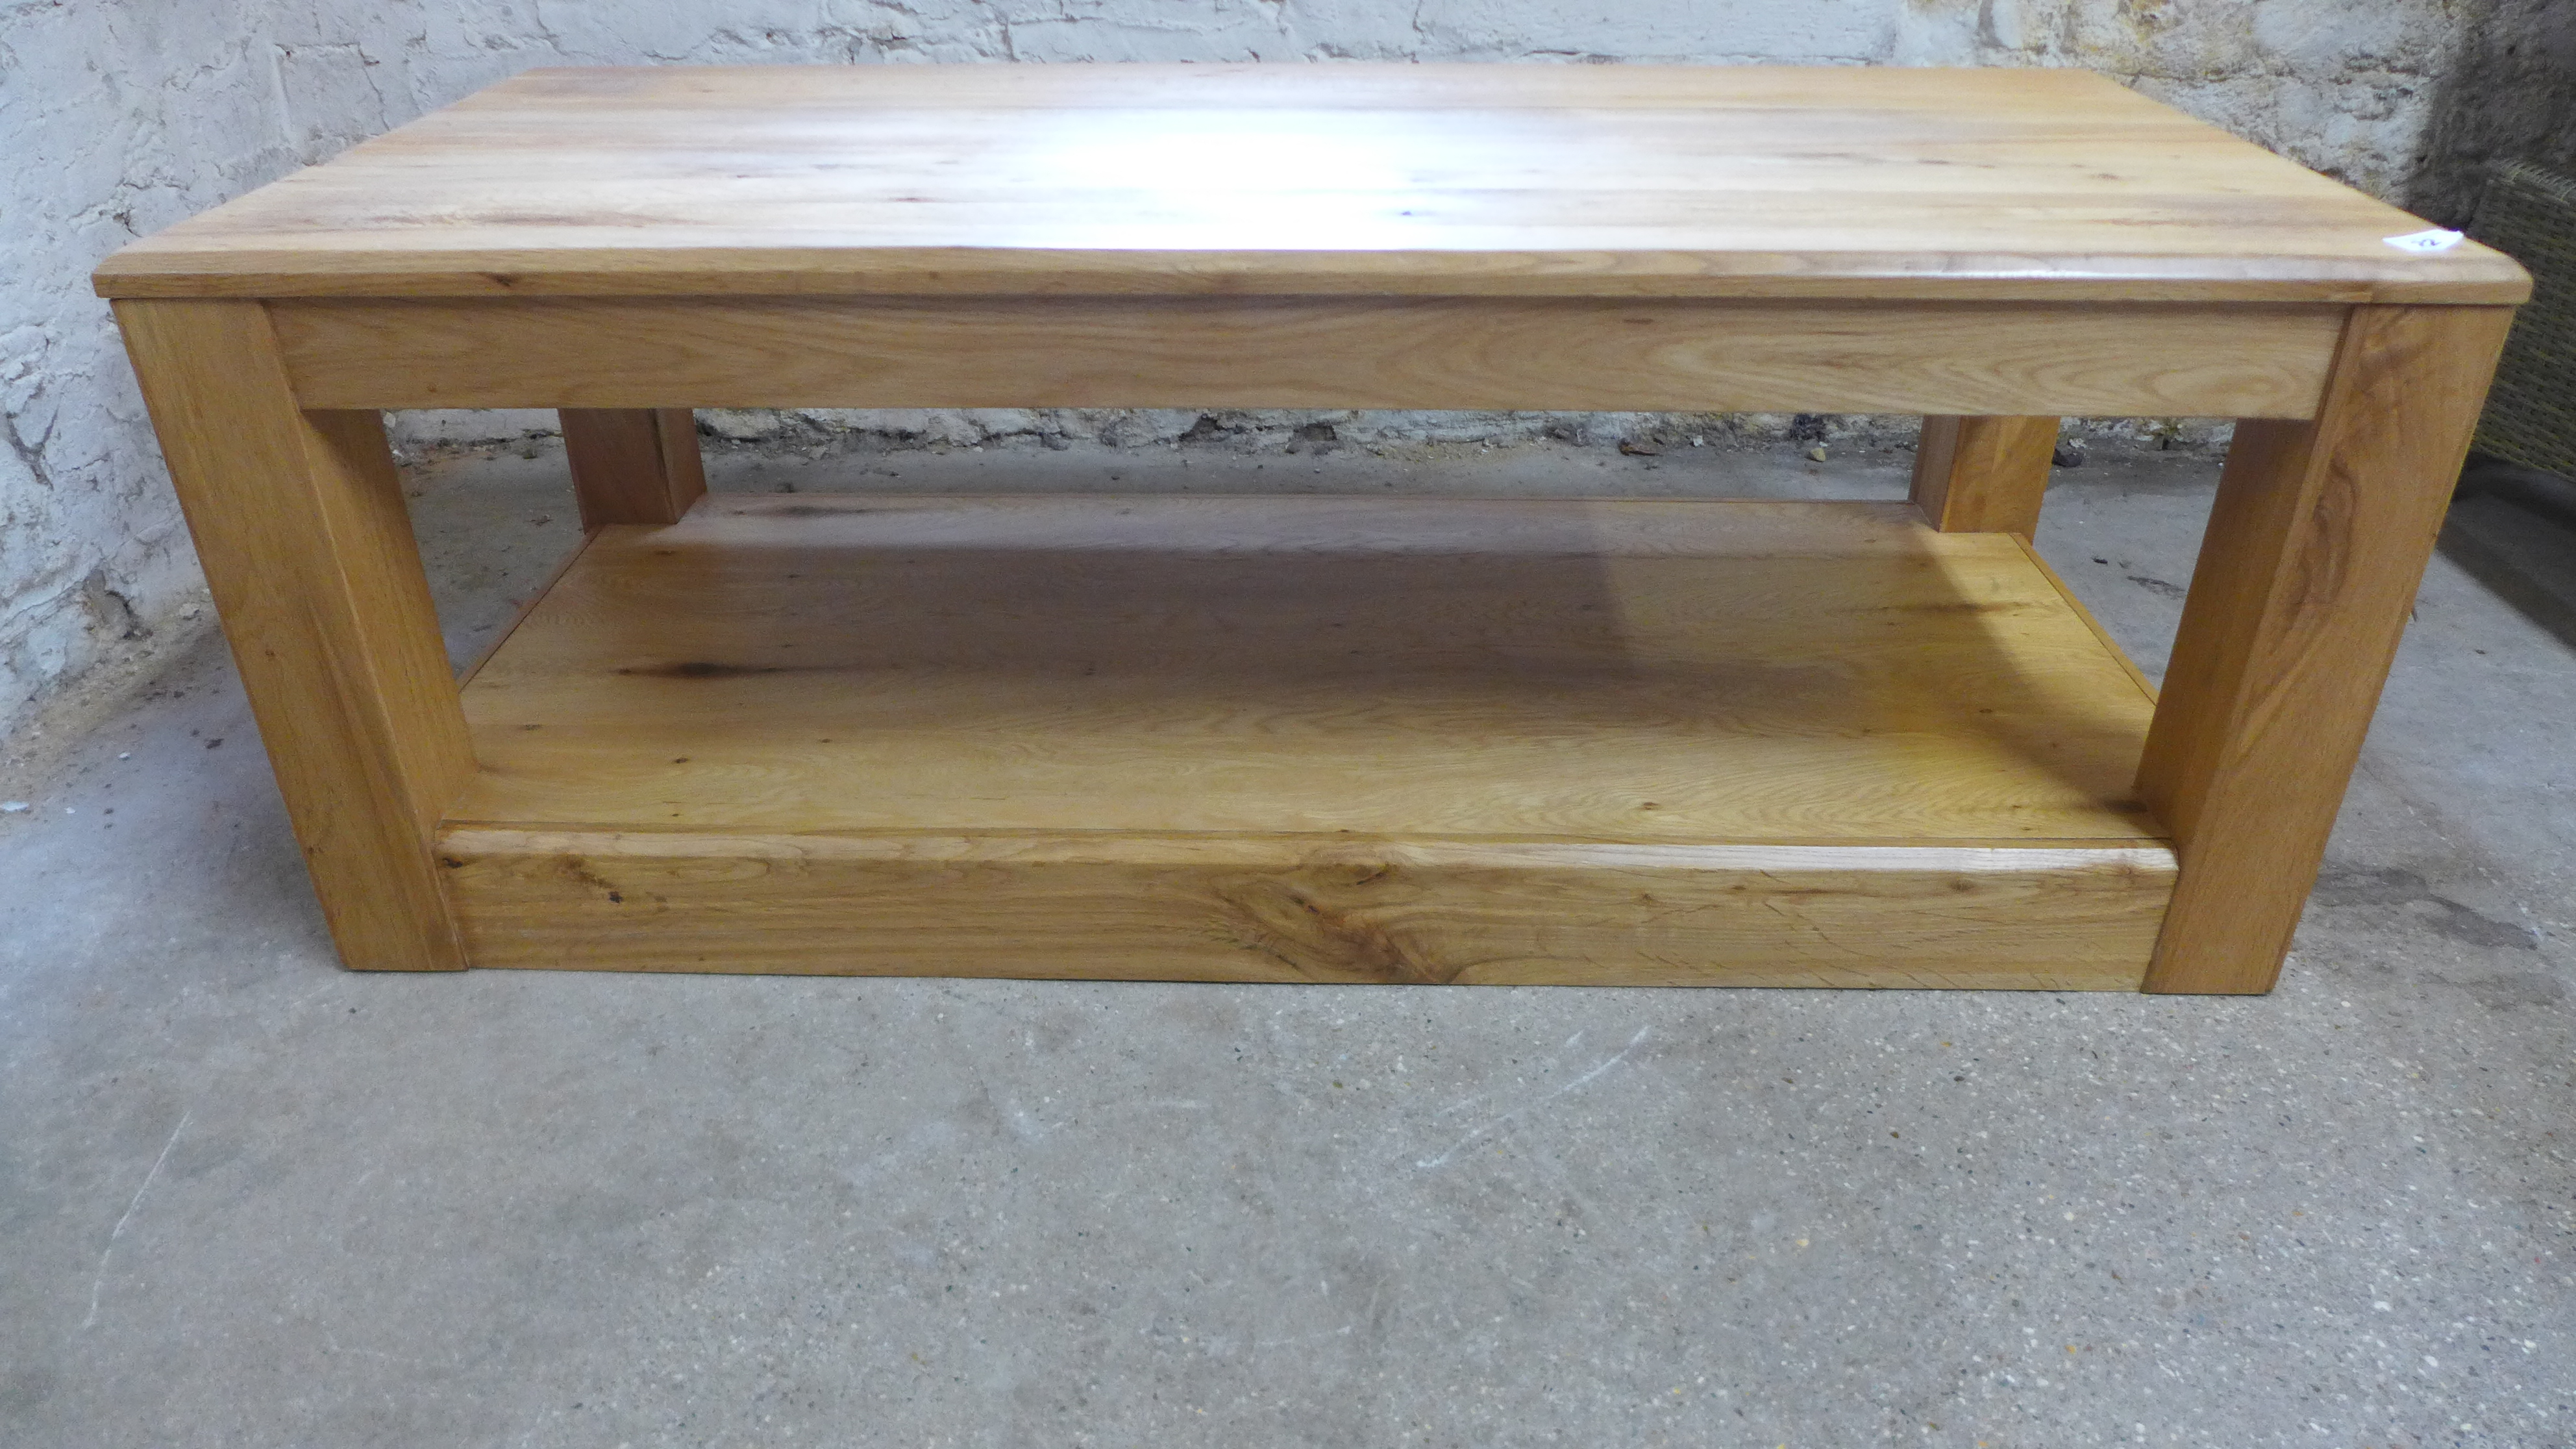 A modern oak coffee table with an under tier - Height 45cm x 120cm x 55cm